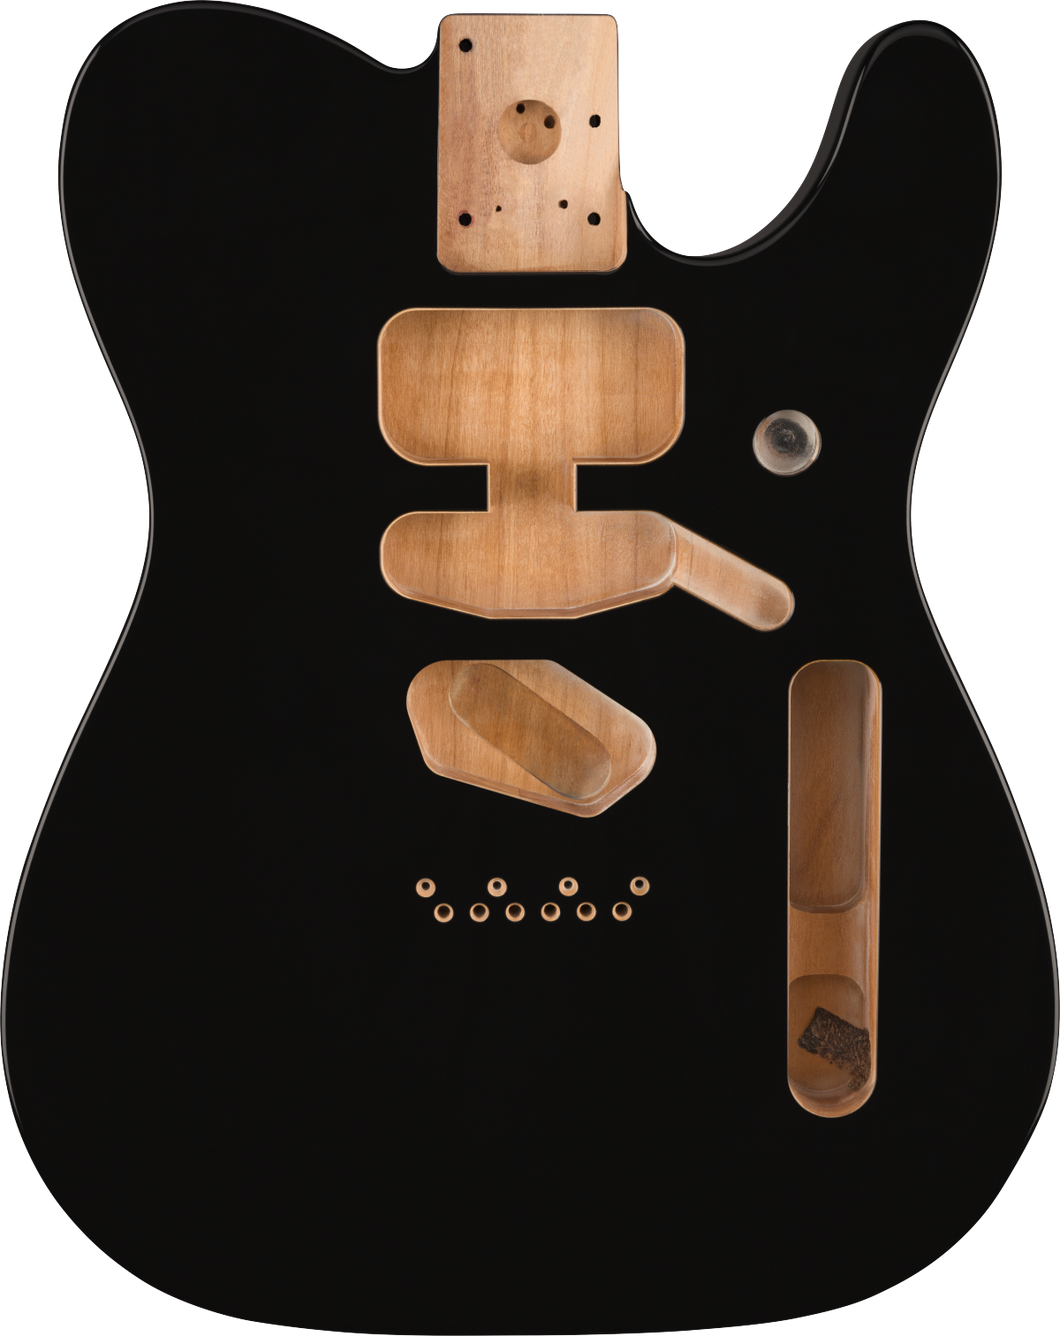 Fender Deluxe Series Tele Body